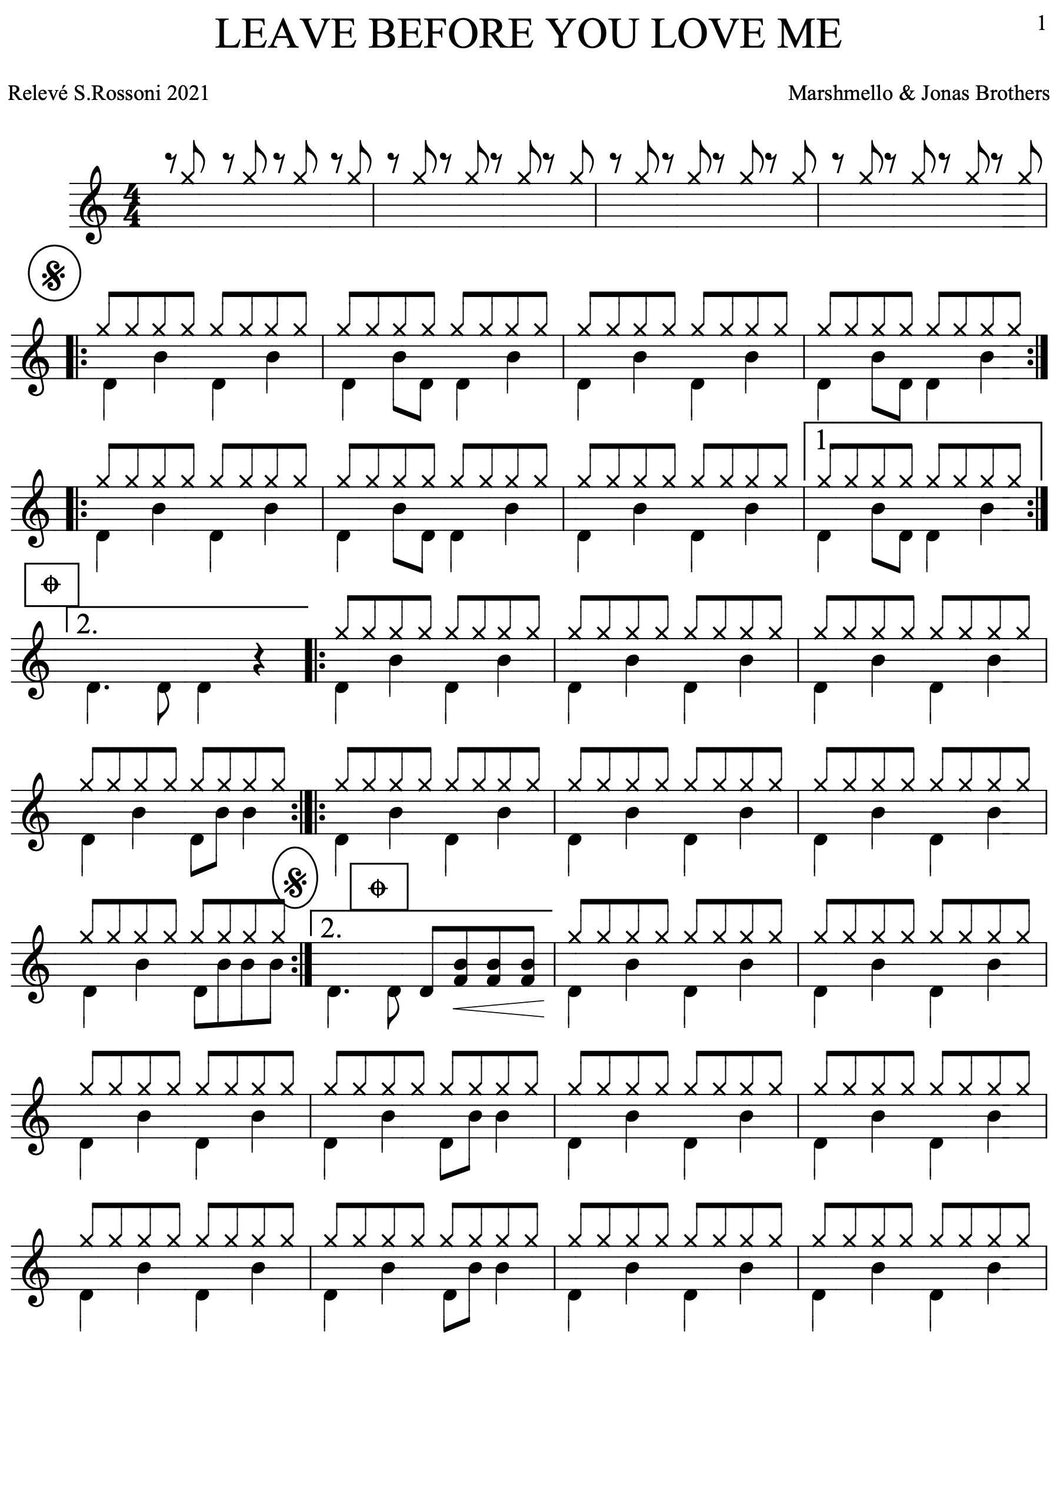 Leave Before You Love Me - Marshmello & Jonas Brothers - Full Drum Transcription / Drum Sheet Music - Rossoni